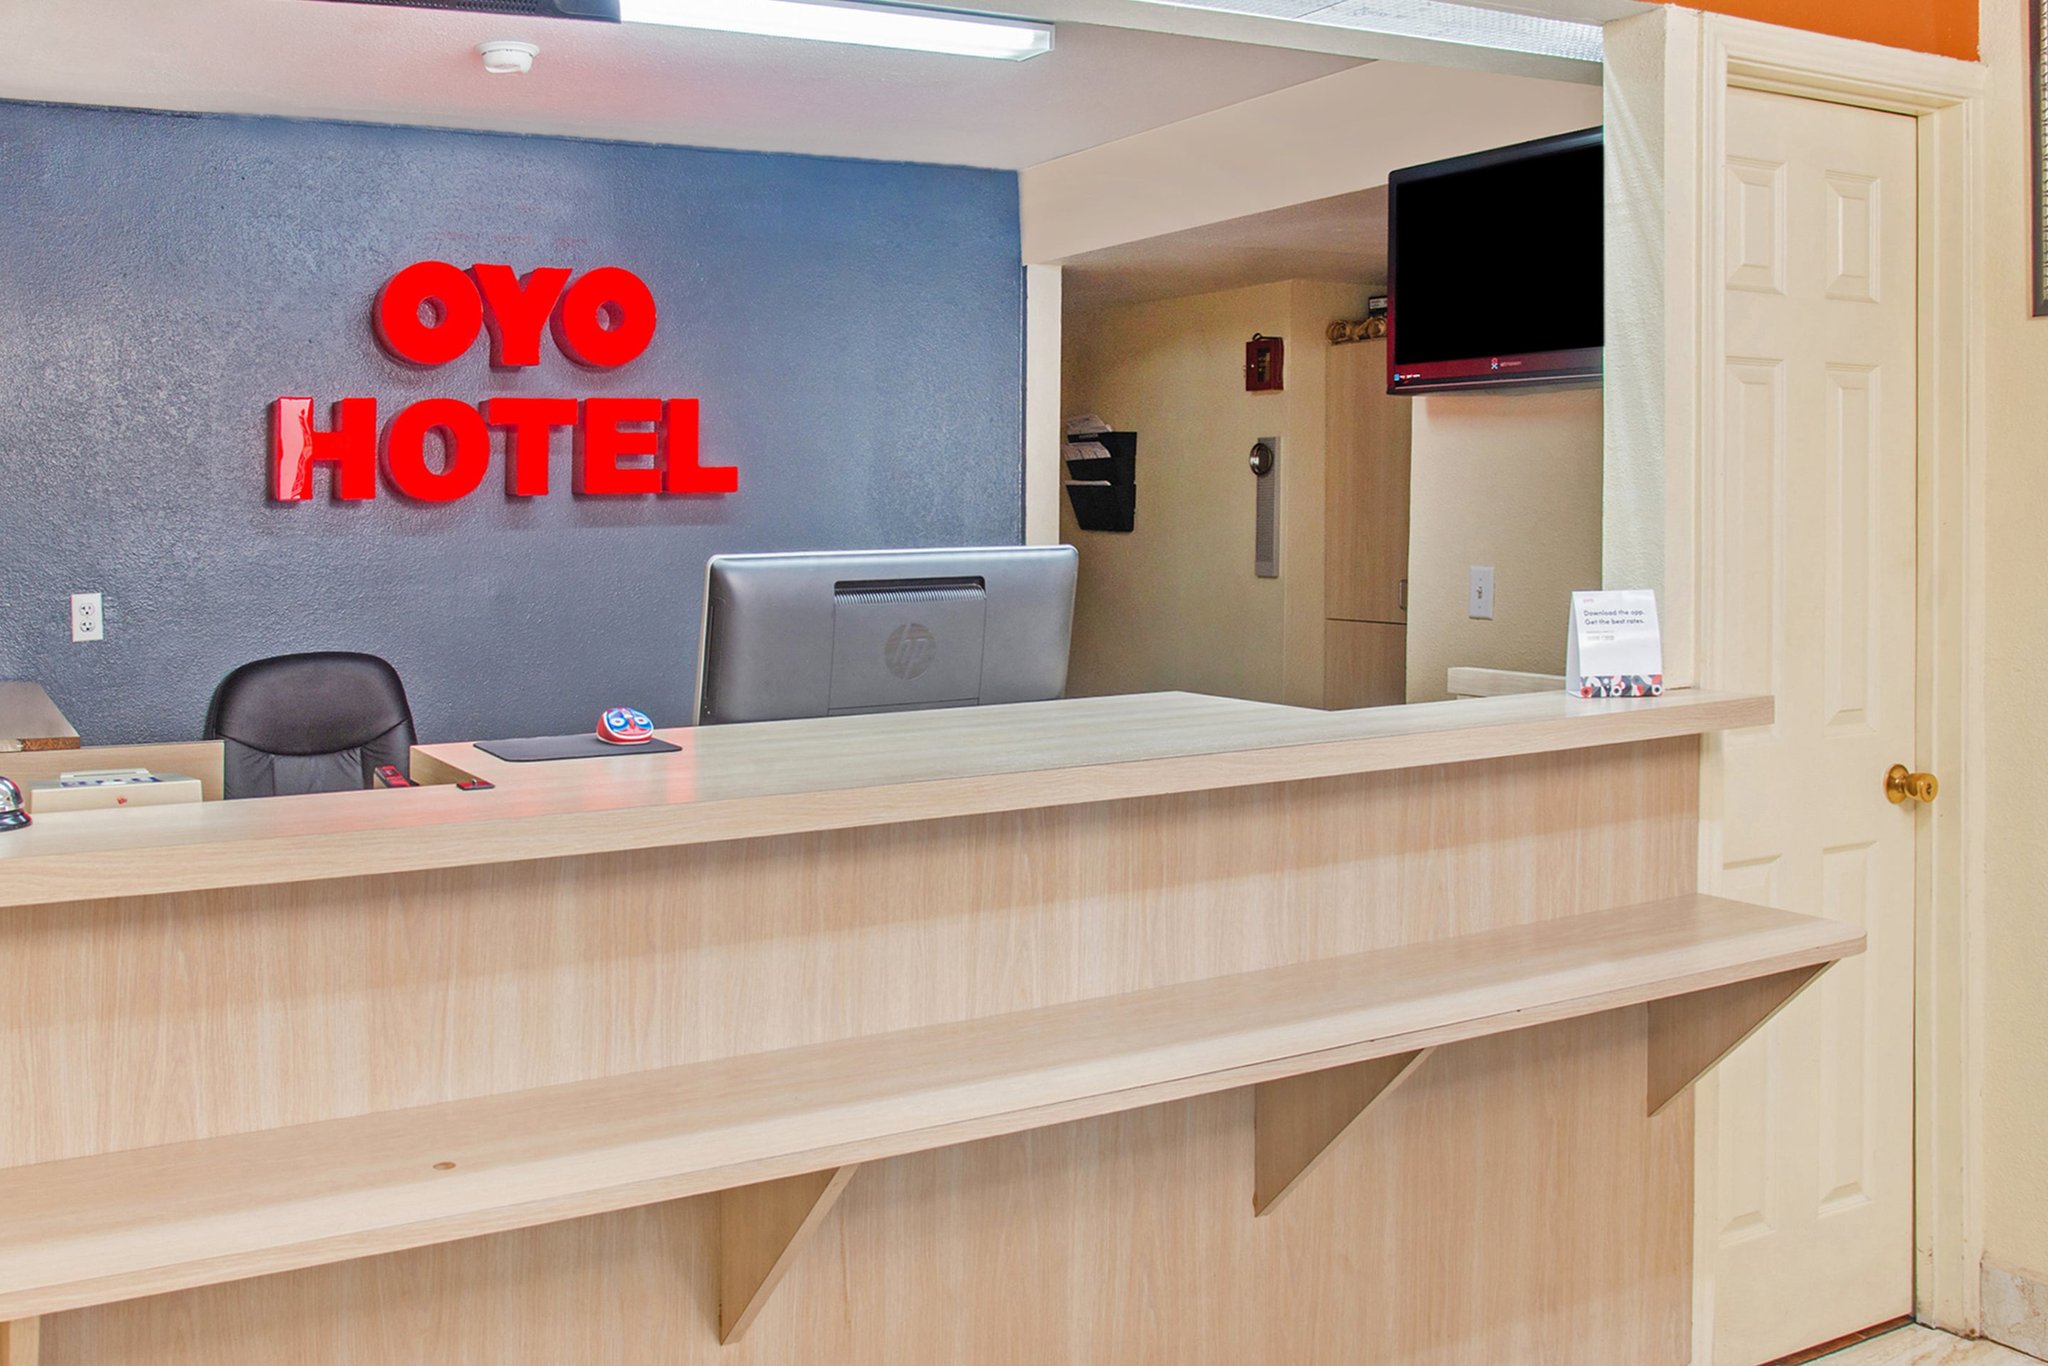 Oyo Hotel Wichita Falls Maur